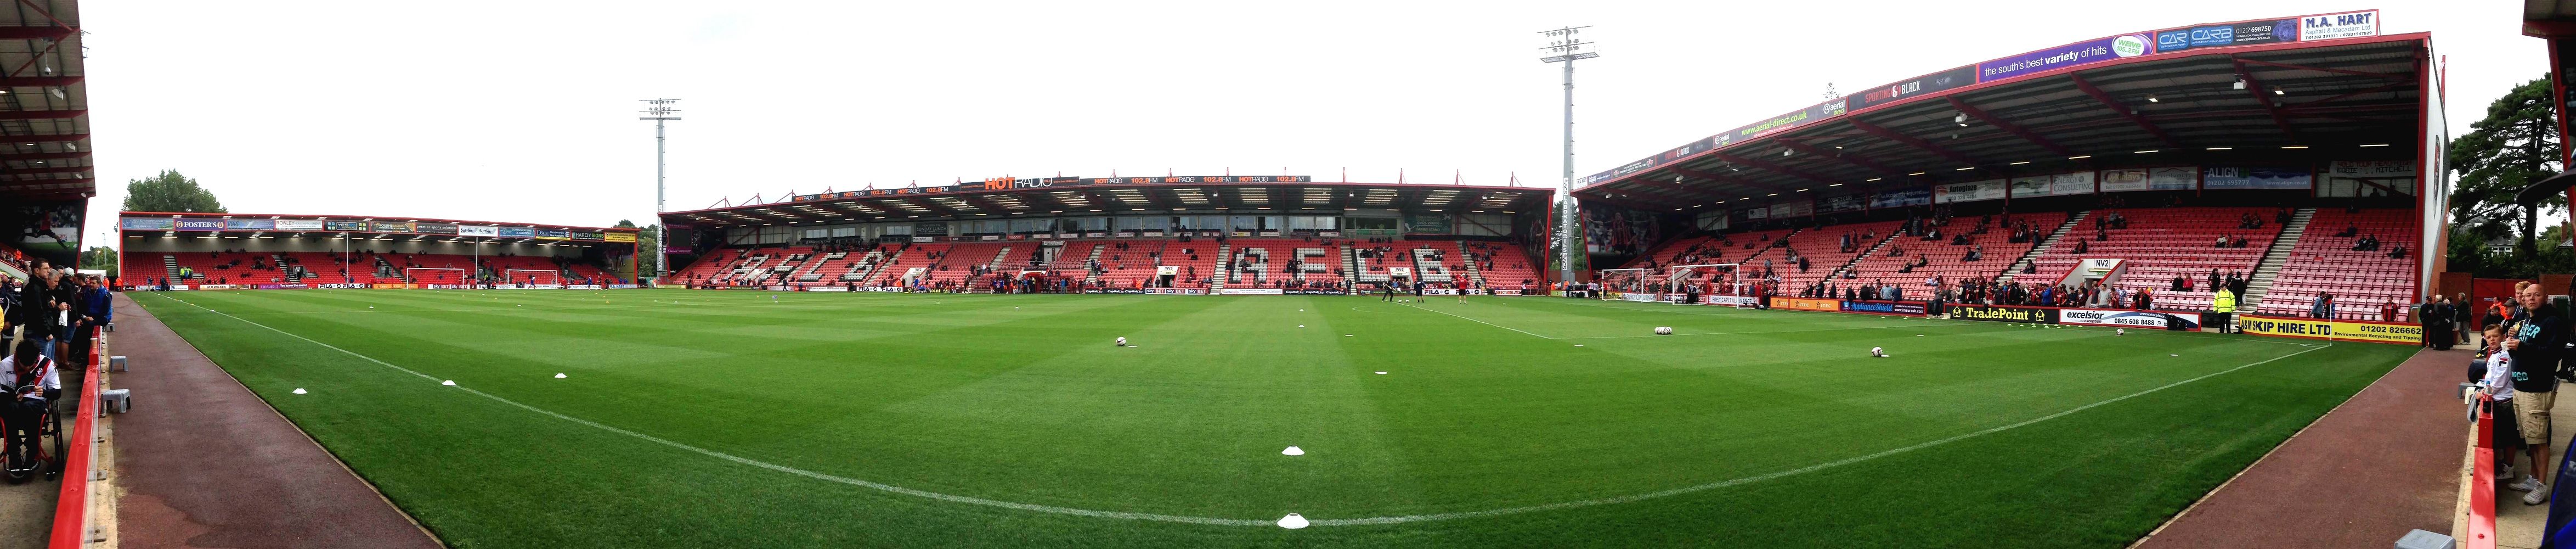 Seat-Compare.com: Vitality Stadium,Bournemouth.